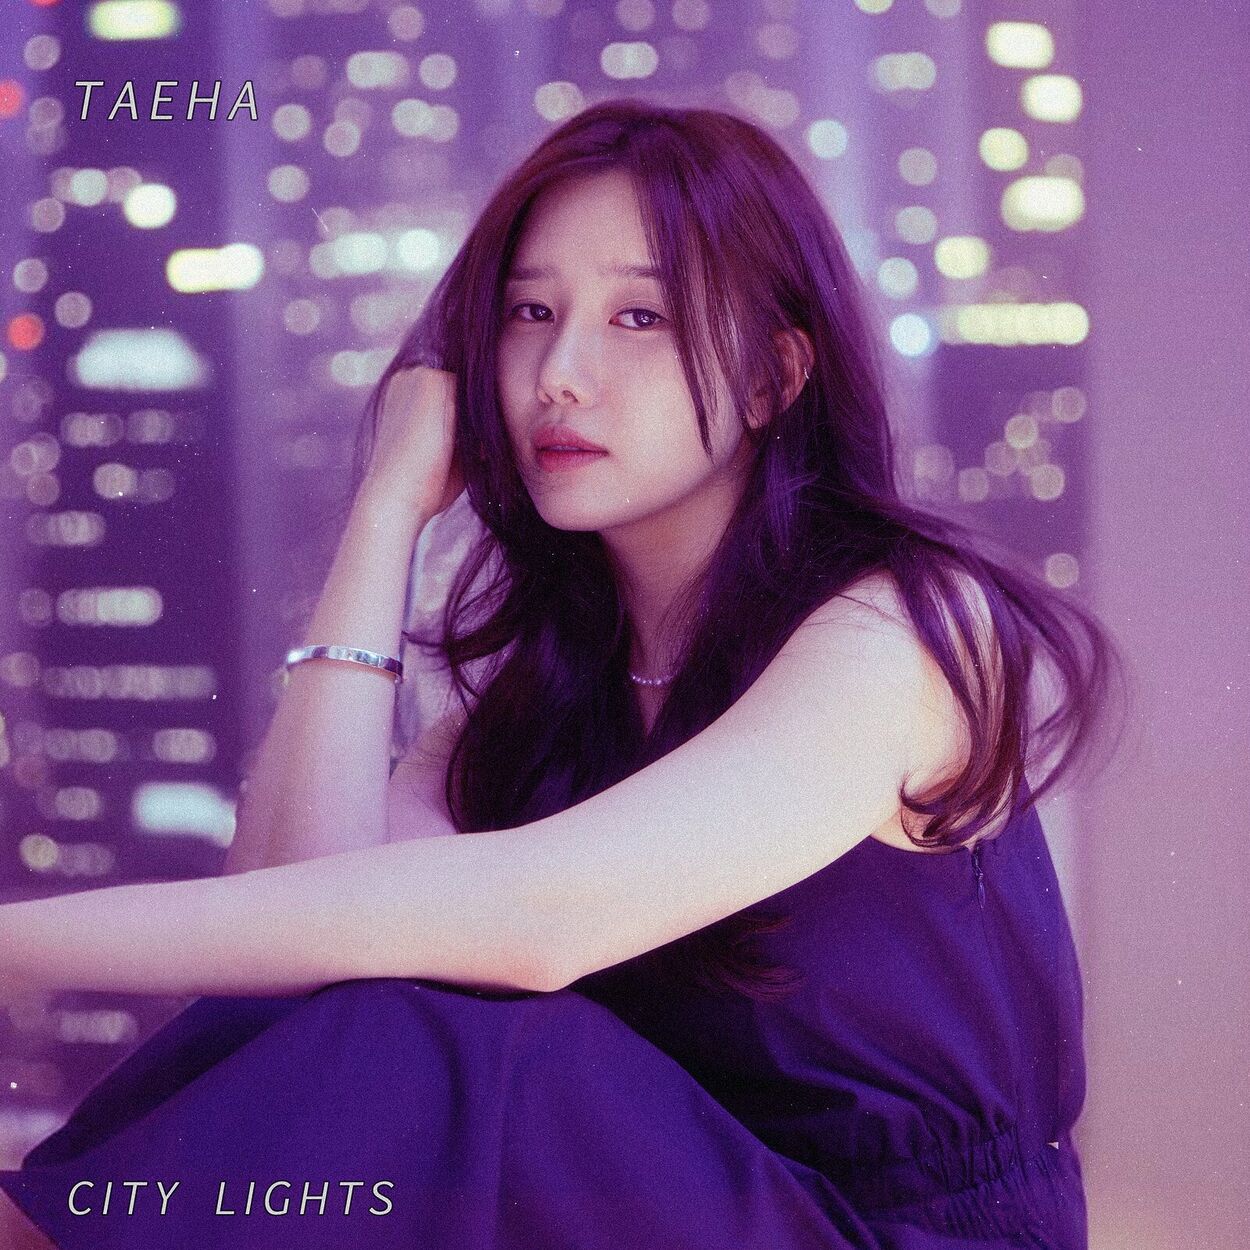 Taeha – City Lights (The Mini Album)